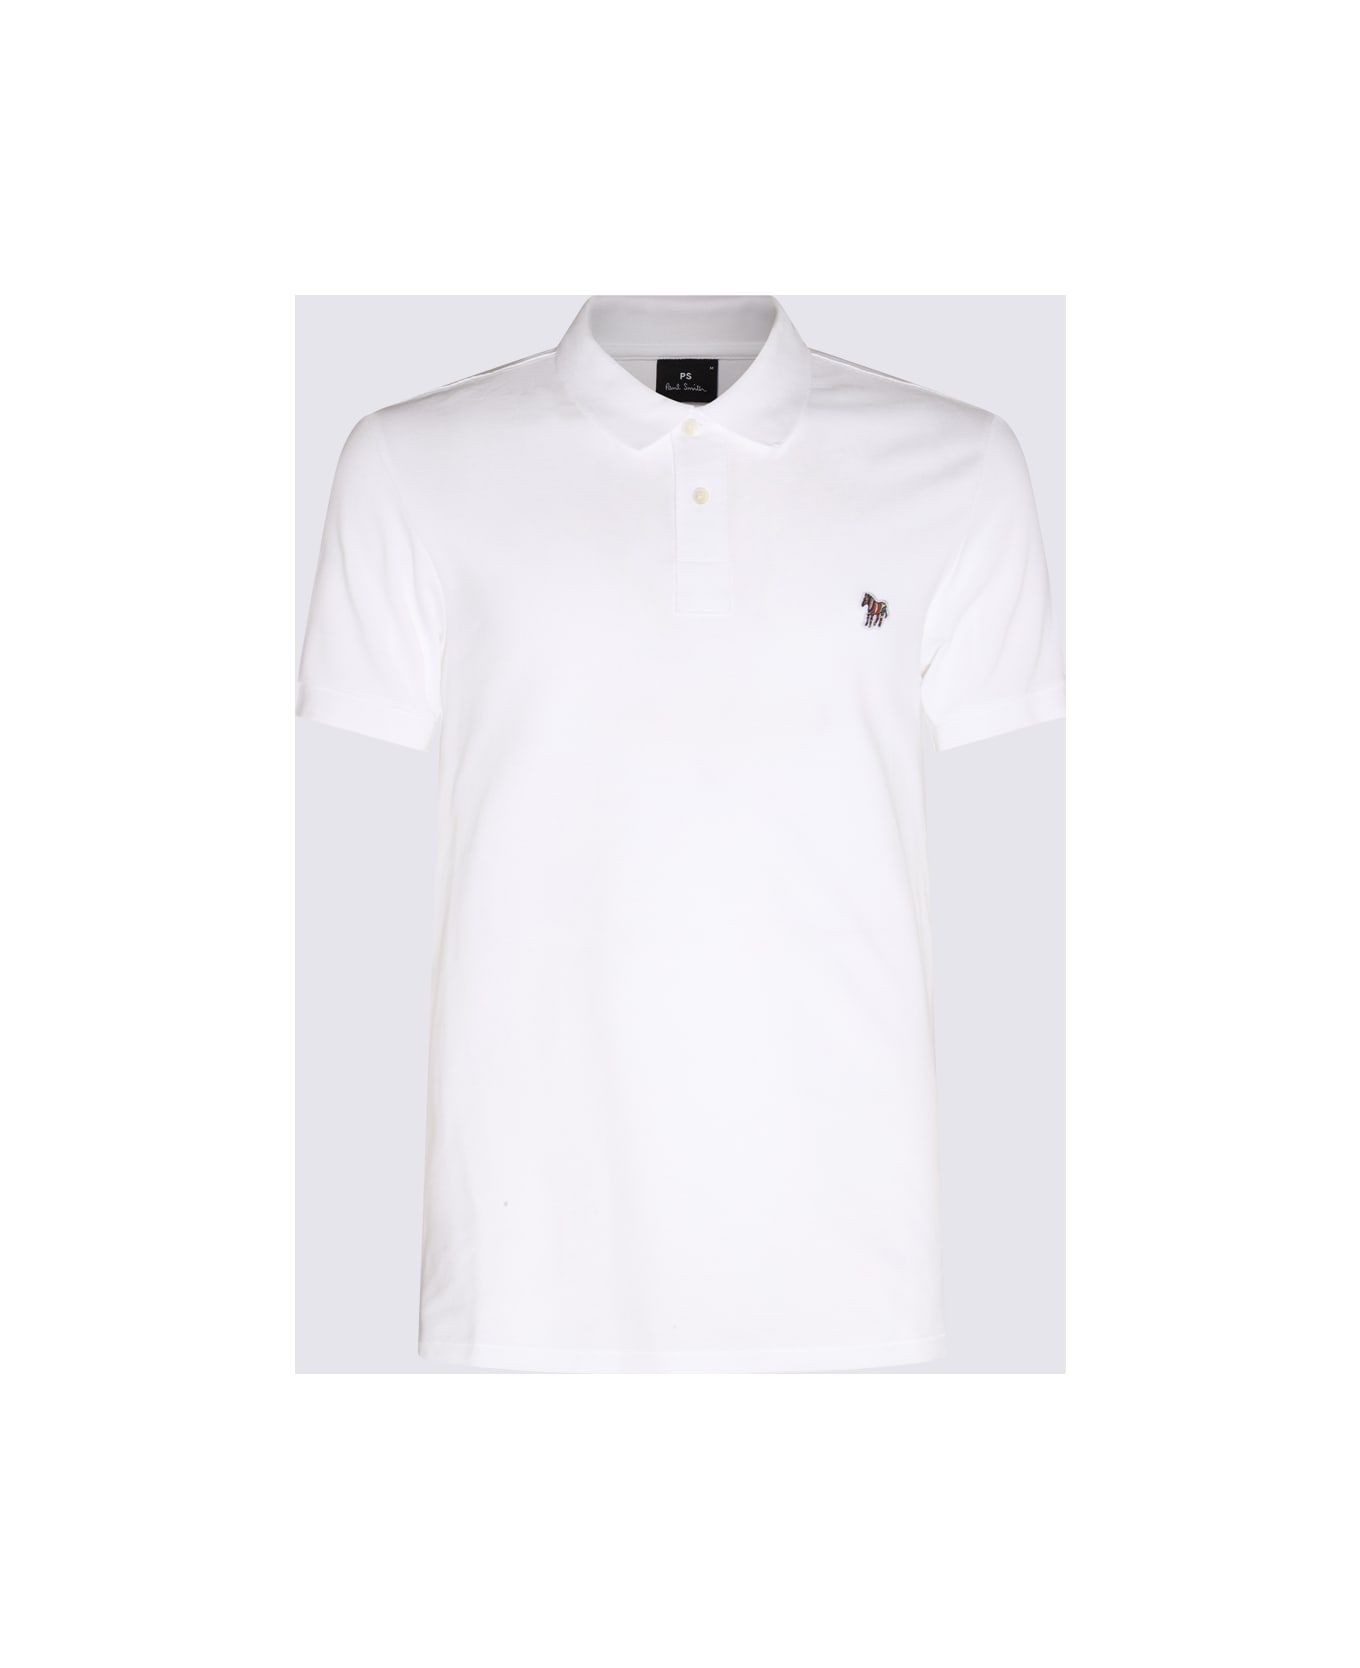 Paul Smith White Cotton Polo Shirt ポロシャツ